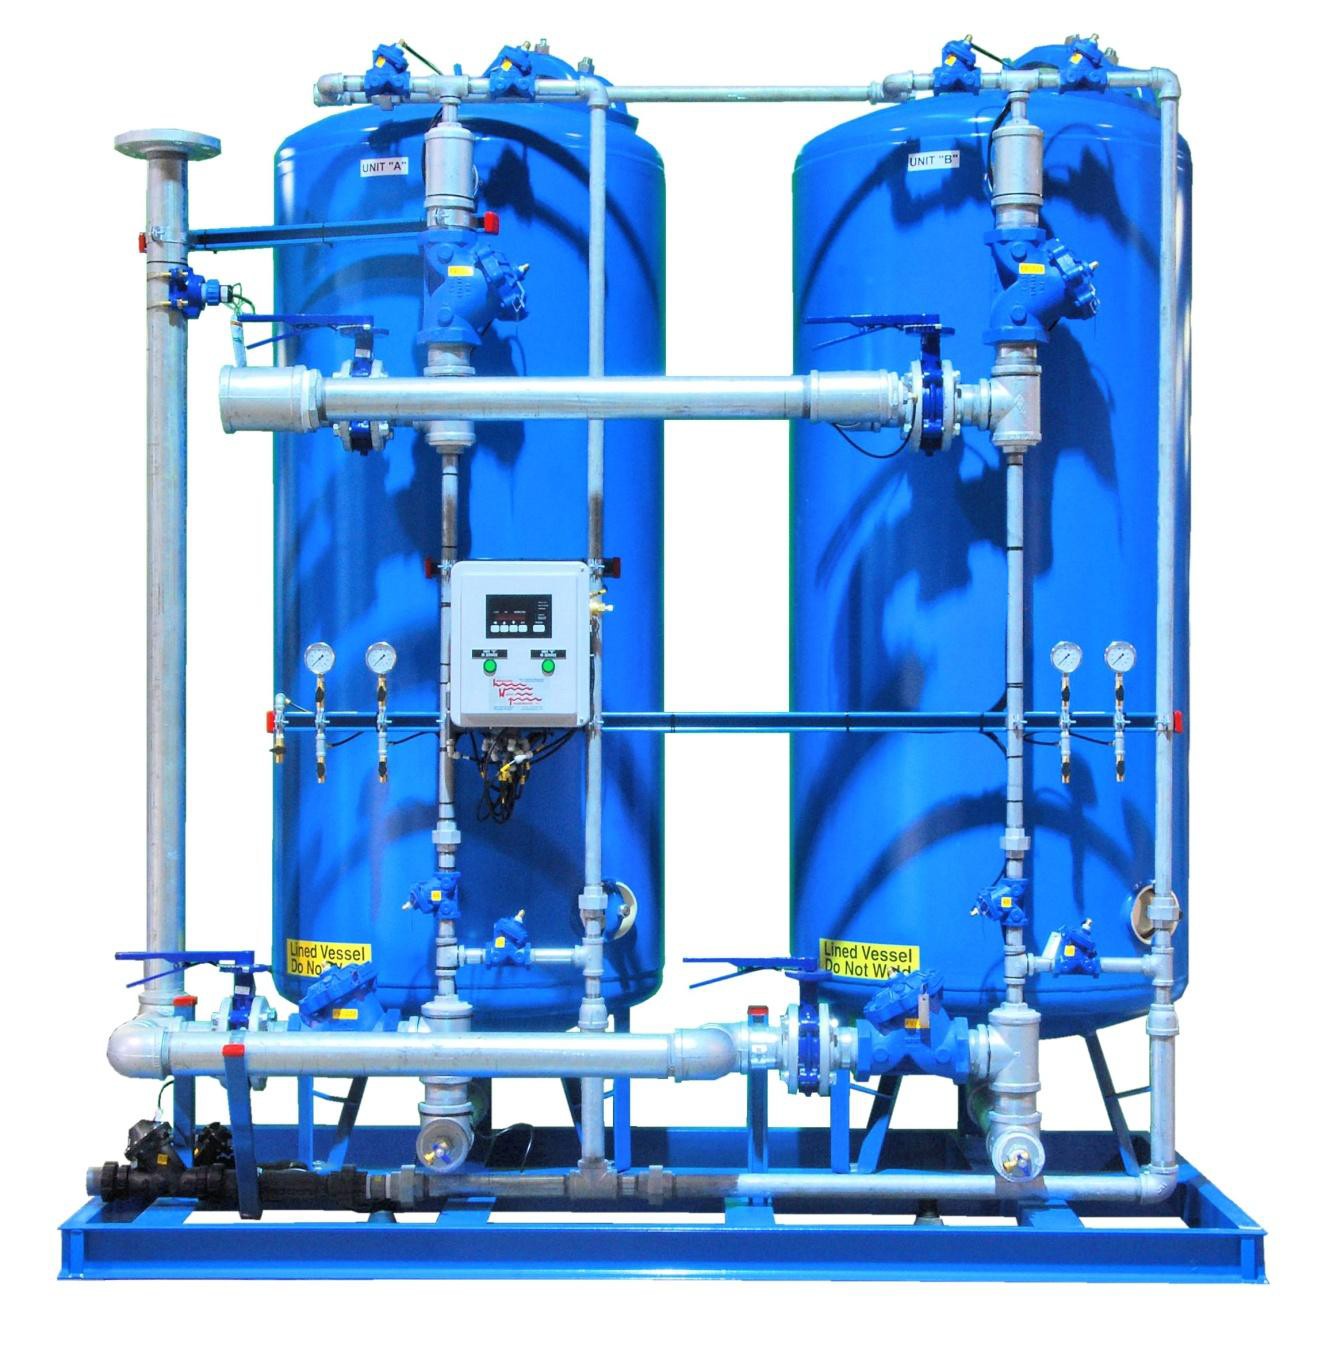 LWTS Industrial Grade Water Softener Series